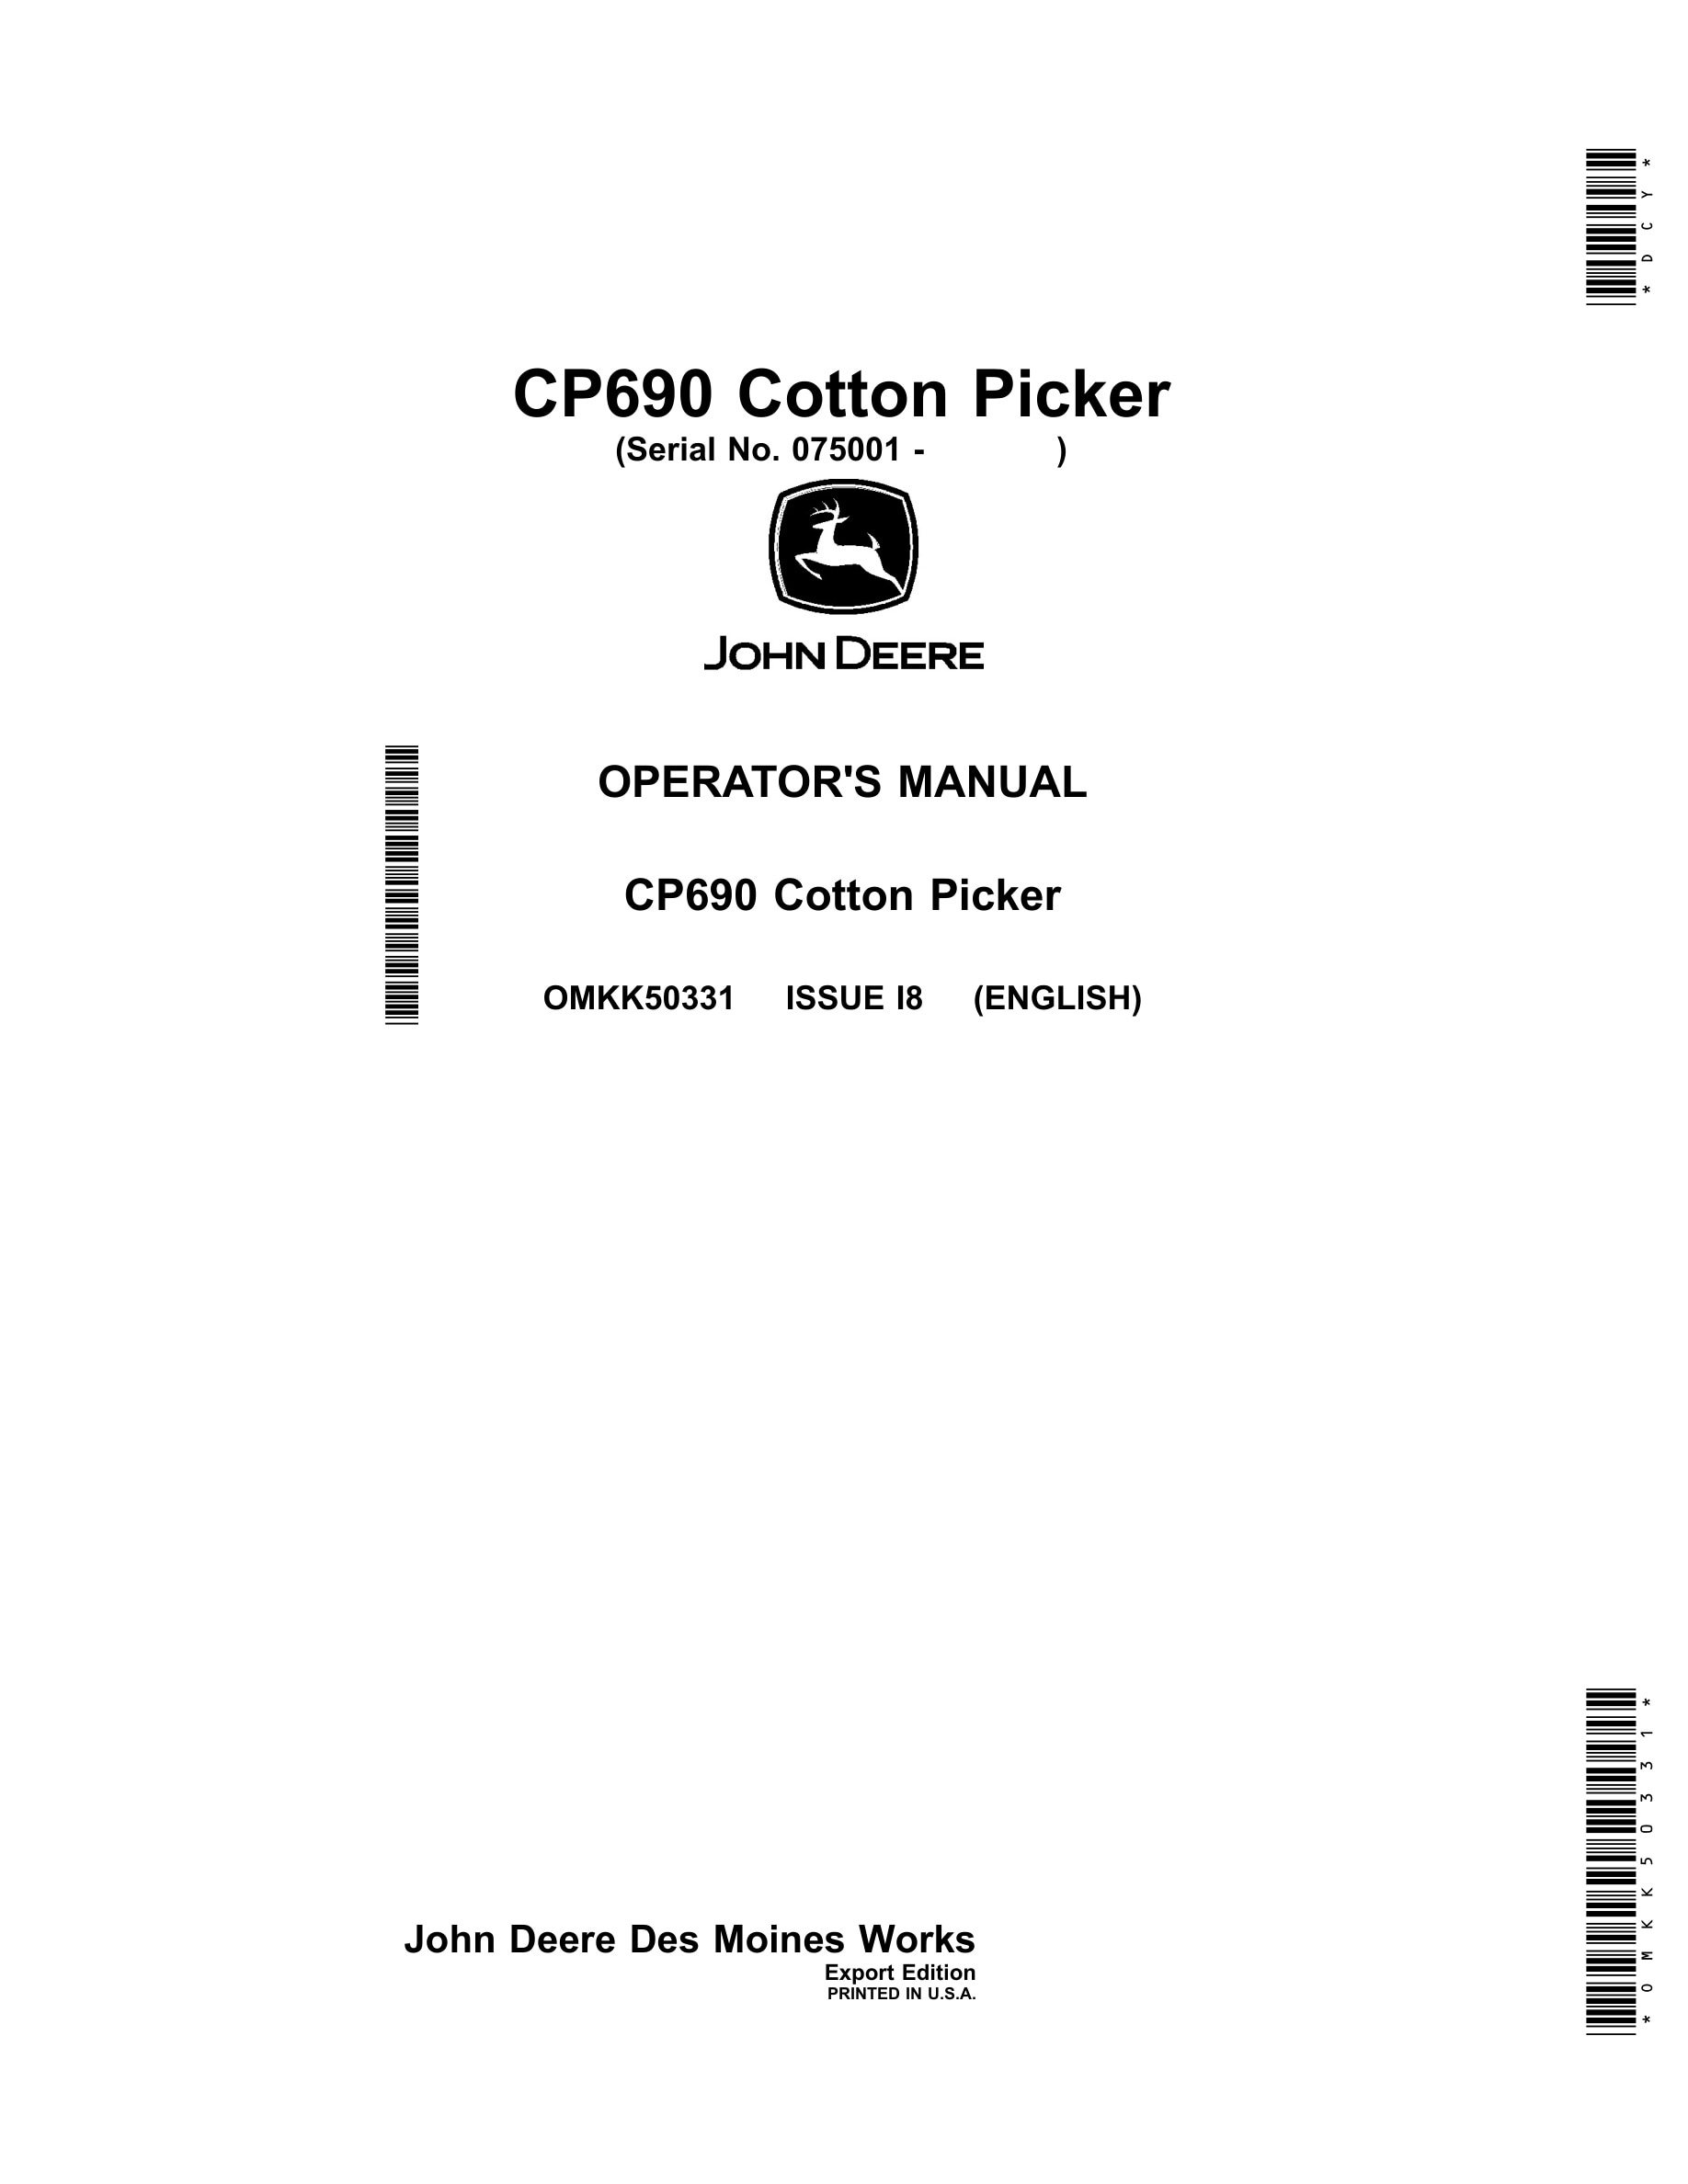 John Deere CP690 Cotton Picker Operator Manual OMKK50331-1